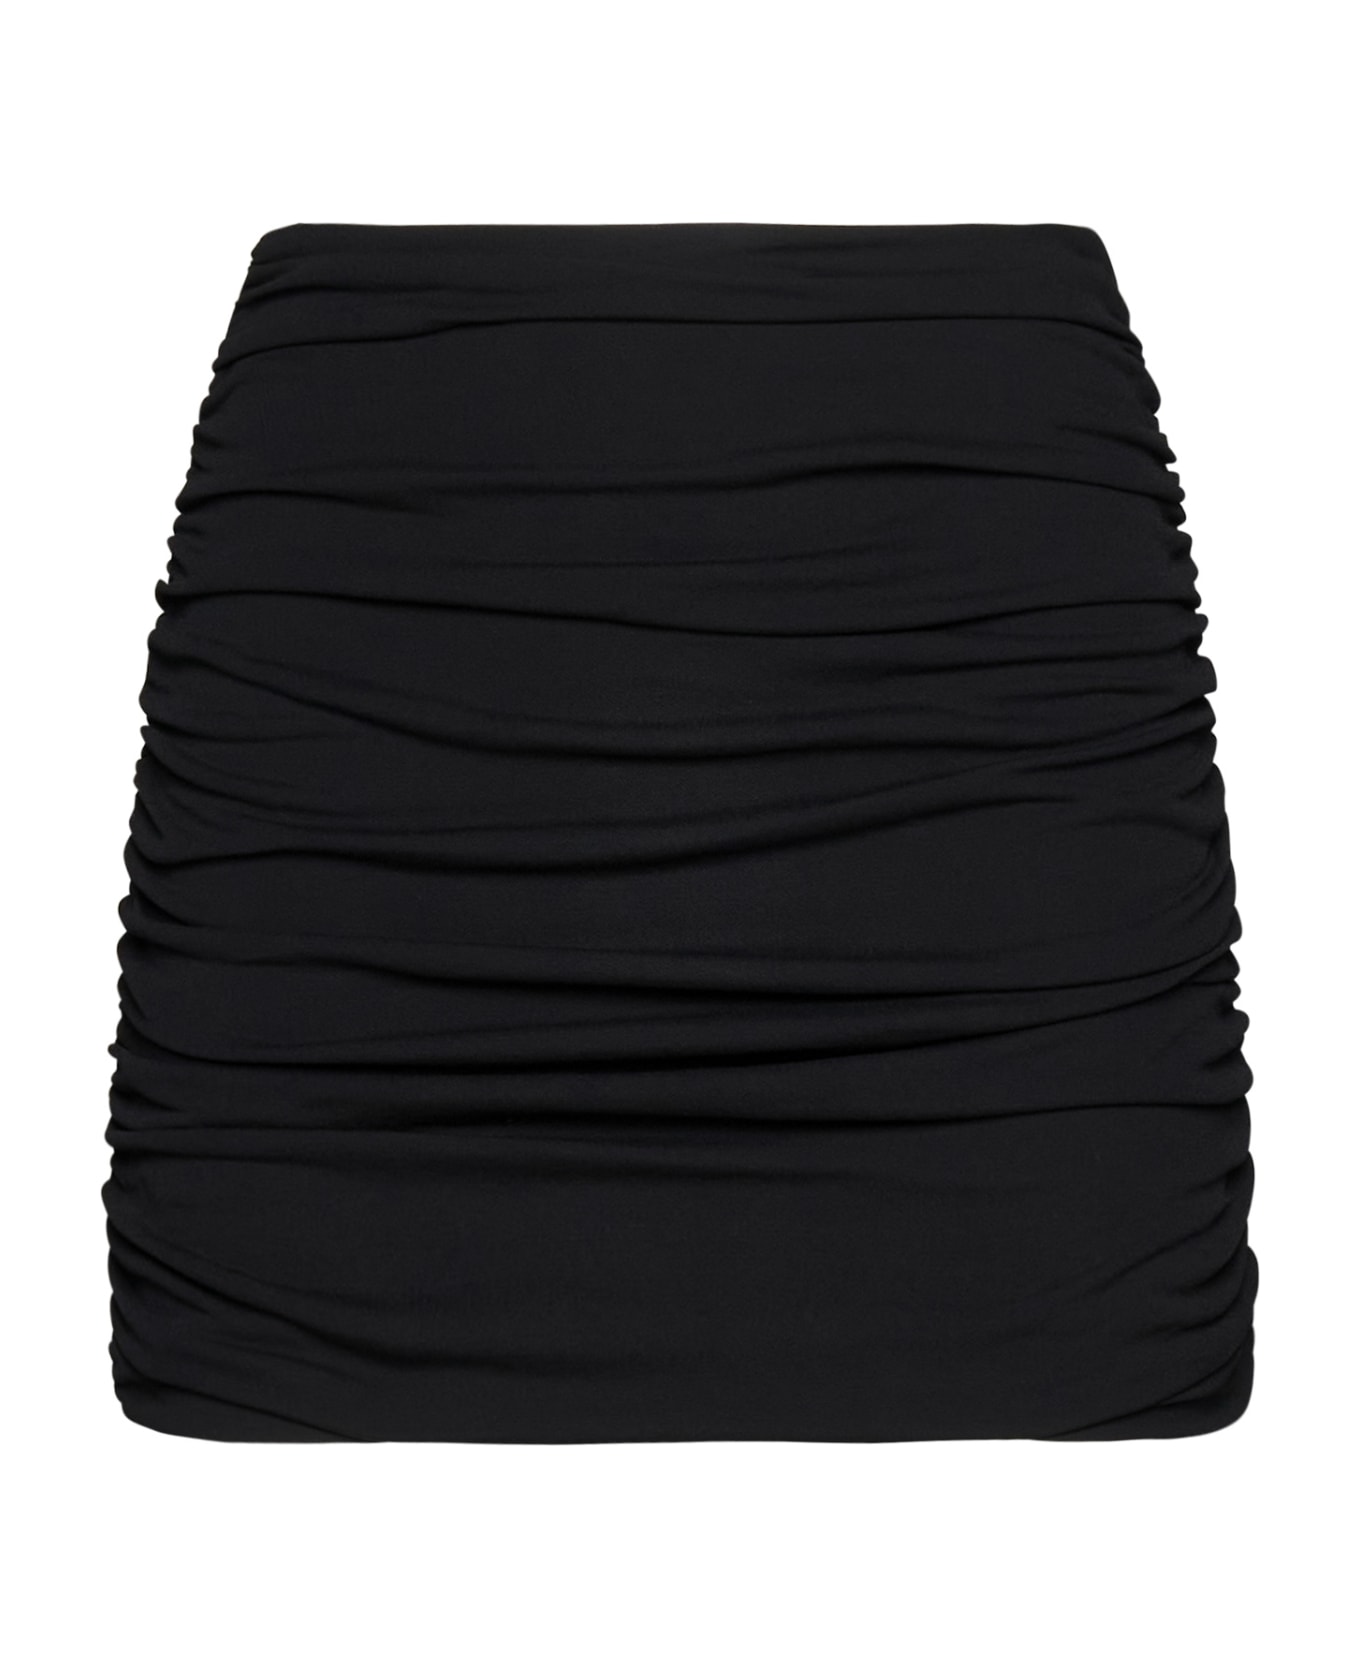 Tory Burch Draped Skirt - black スカート